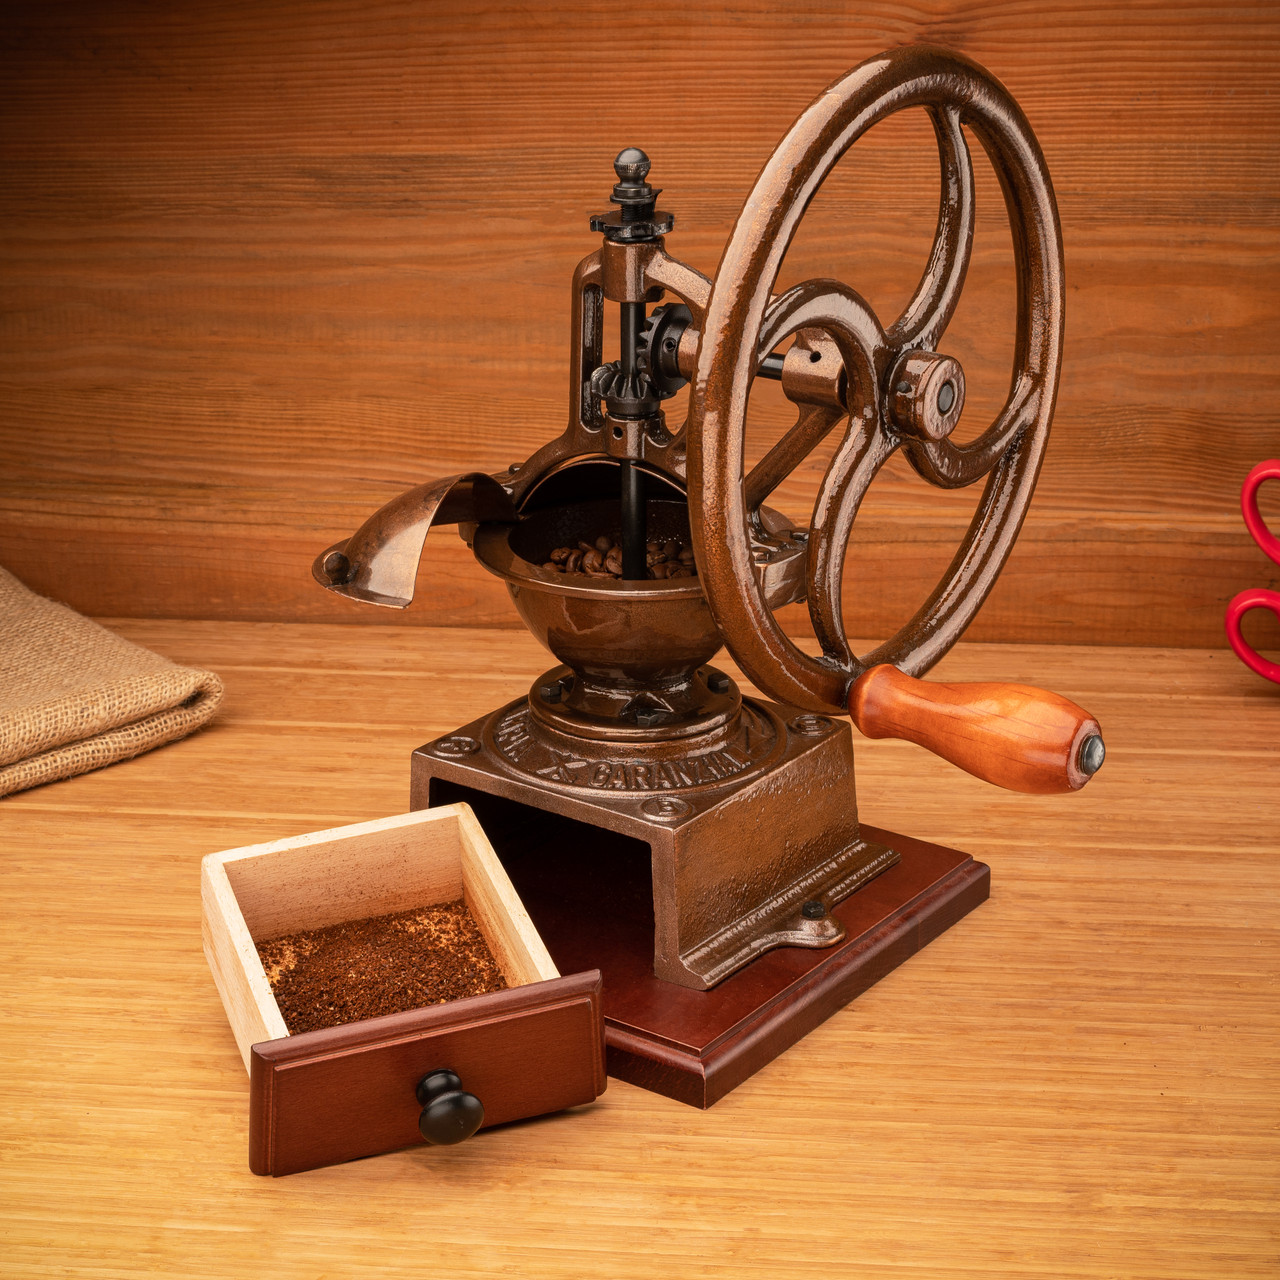 Copper coffee grinder